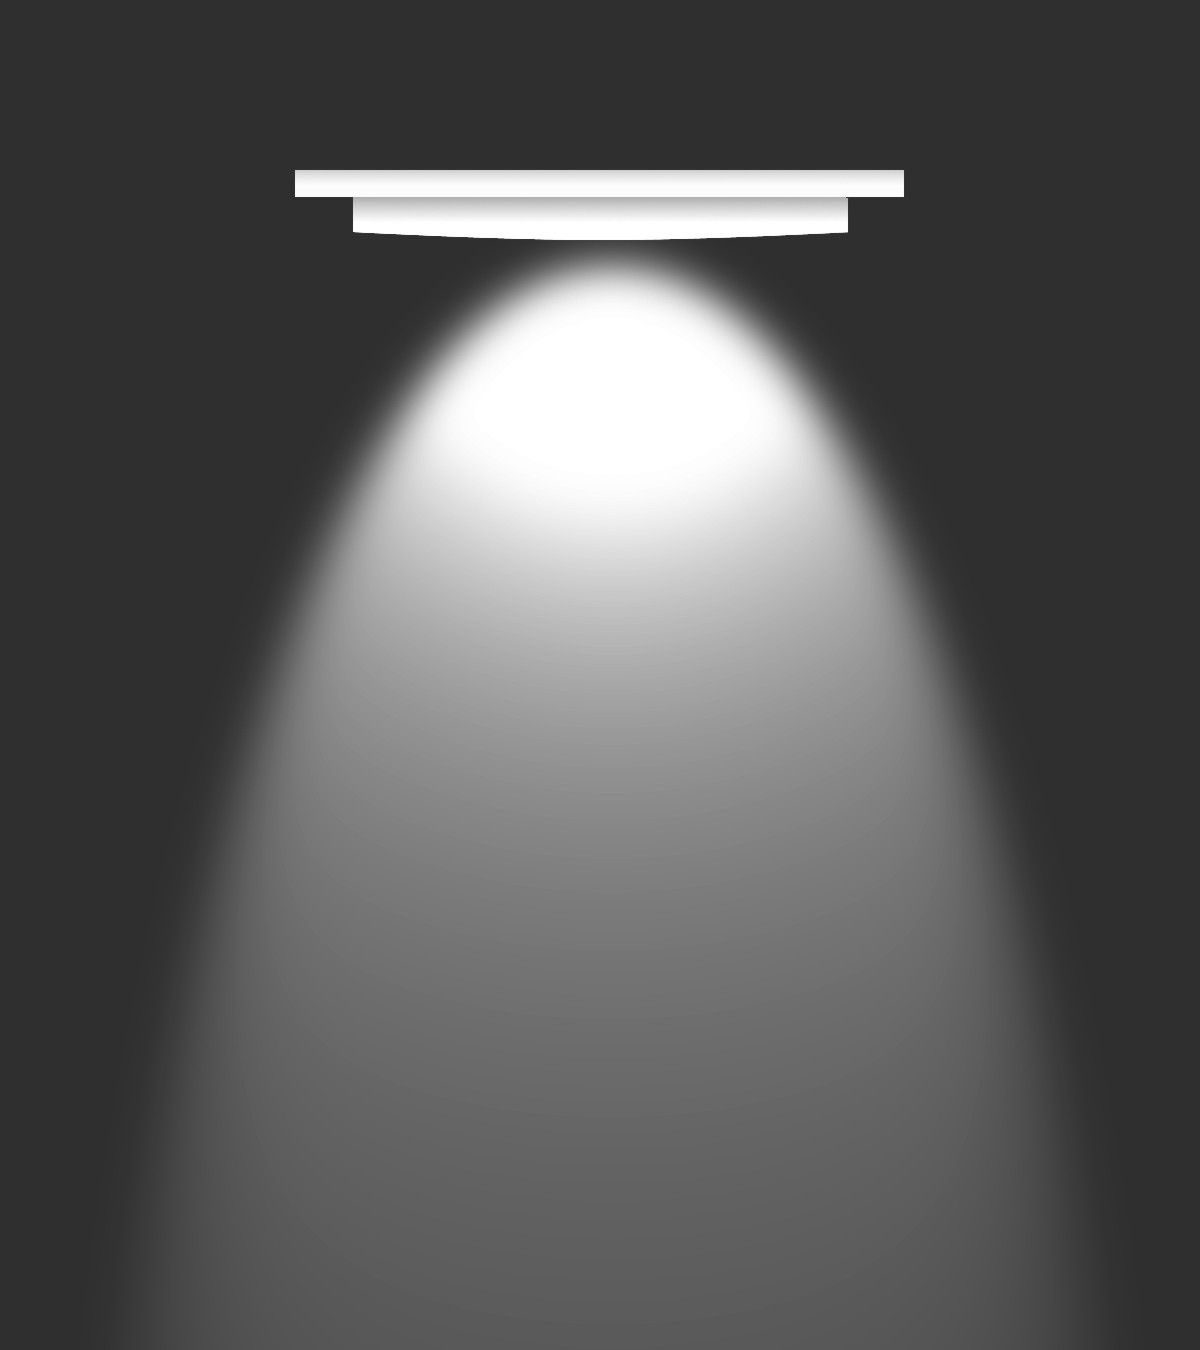 Светильник светодиодный Slide, 1,2Вт, 24В, свет холодный алю, 46х46х10мм